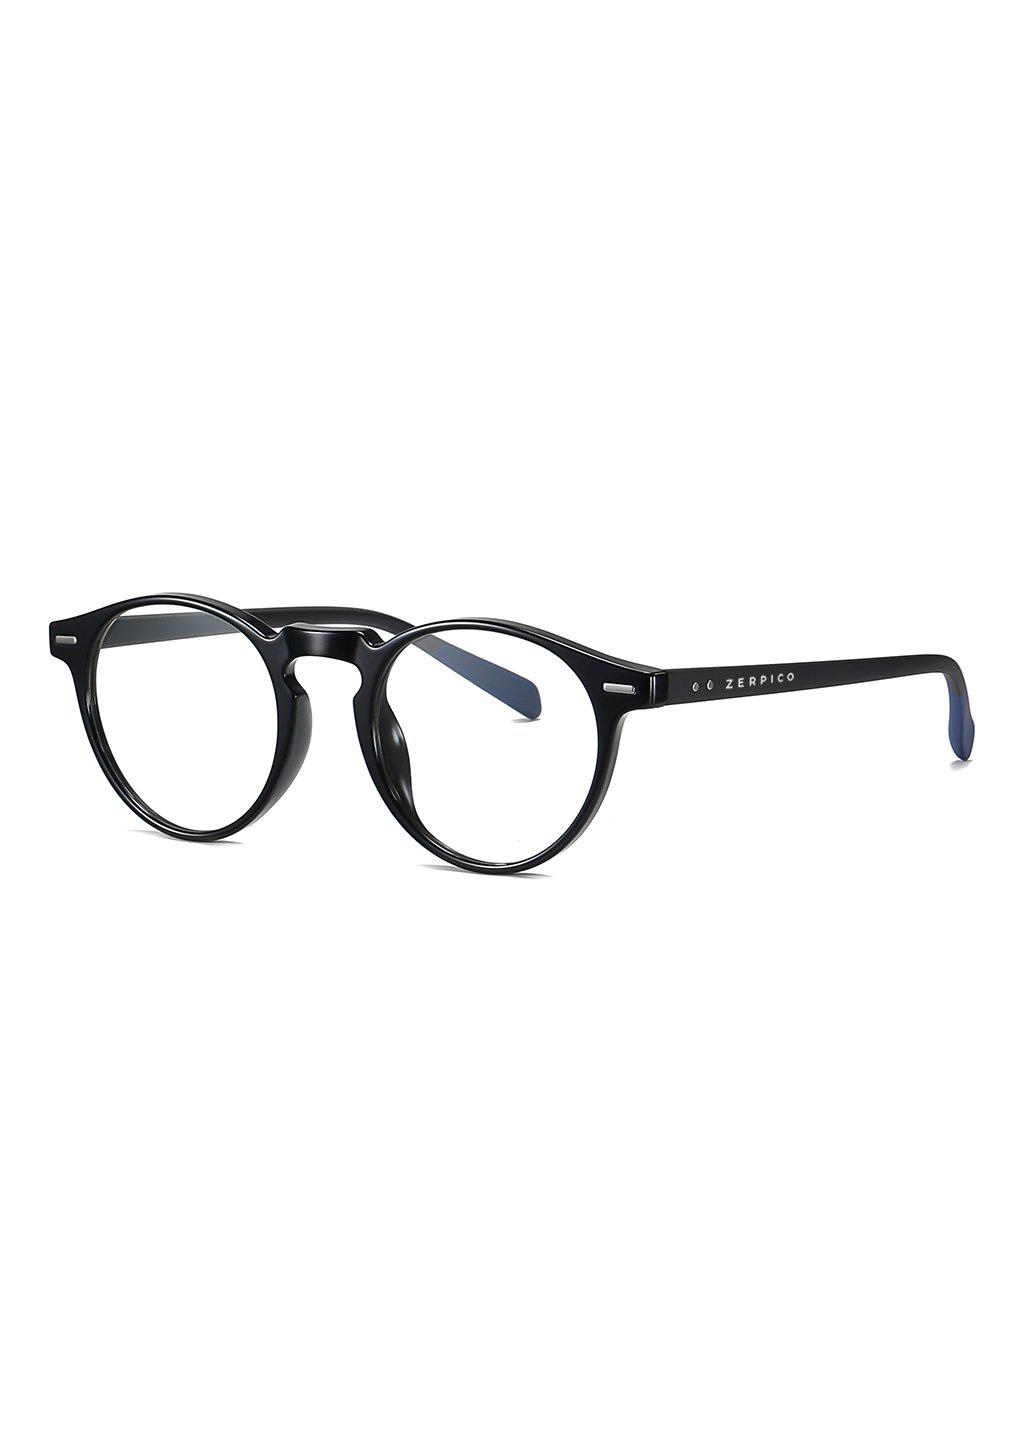 Nexus - Blue-light glasses - Holo-2